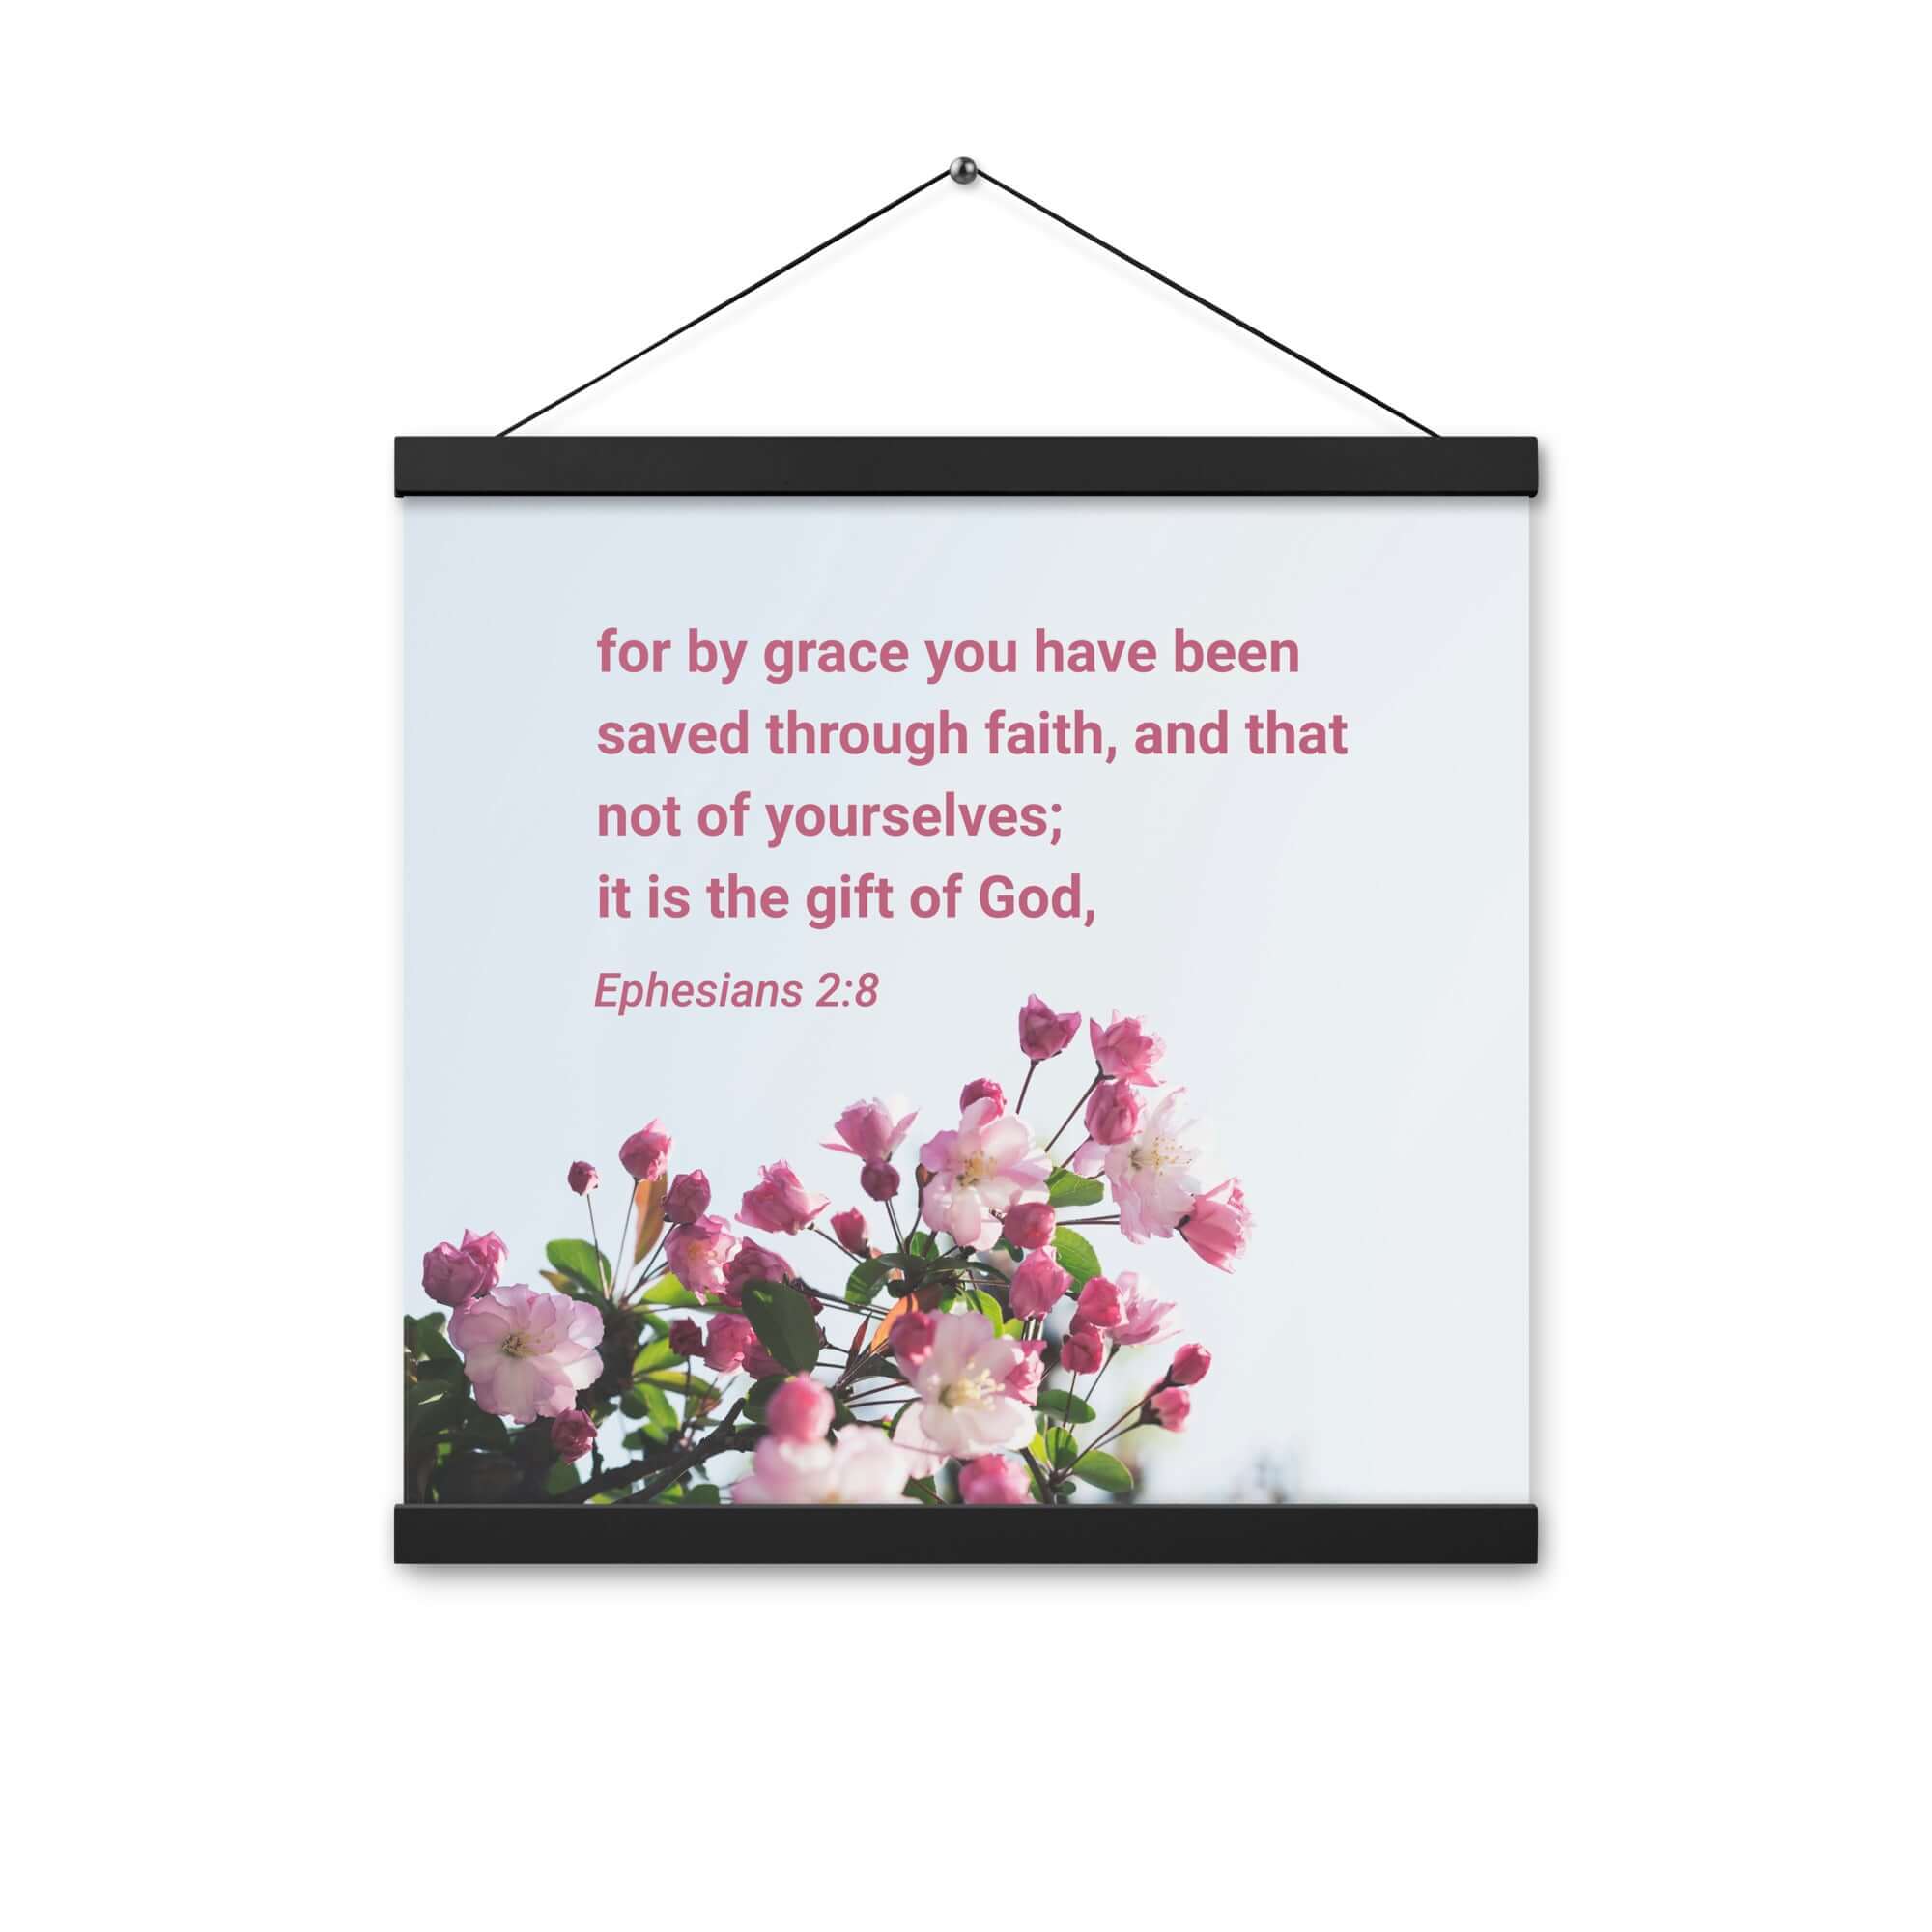 Eph 2:8 - Bible Verse, saved through faith Enhanced Matte Paper Poster With Hanger